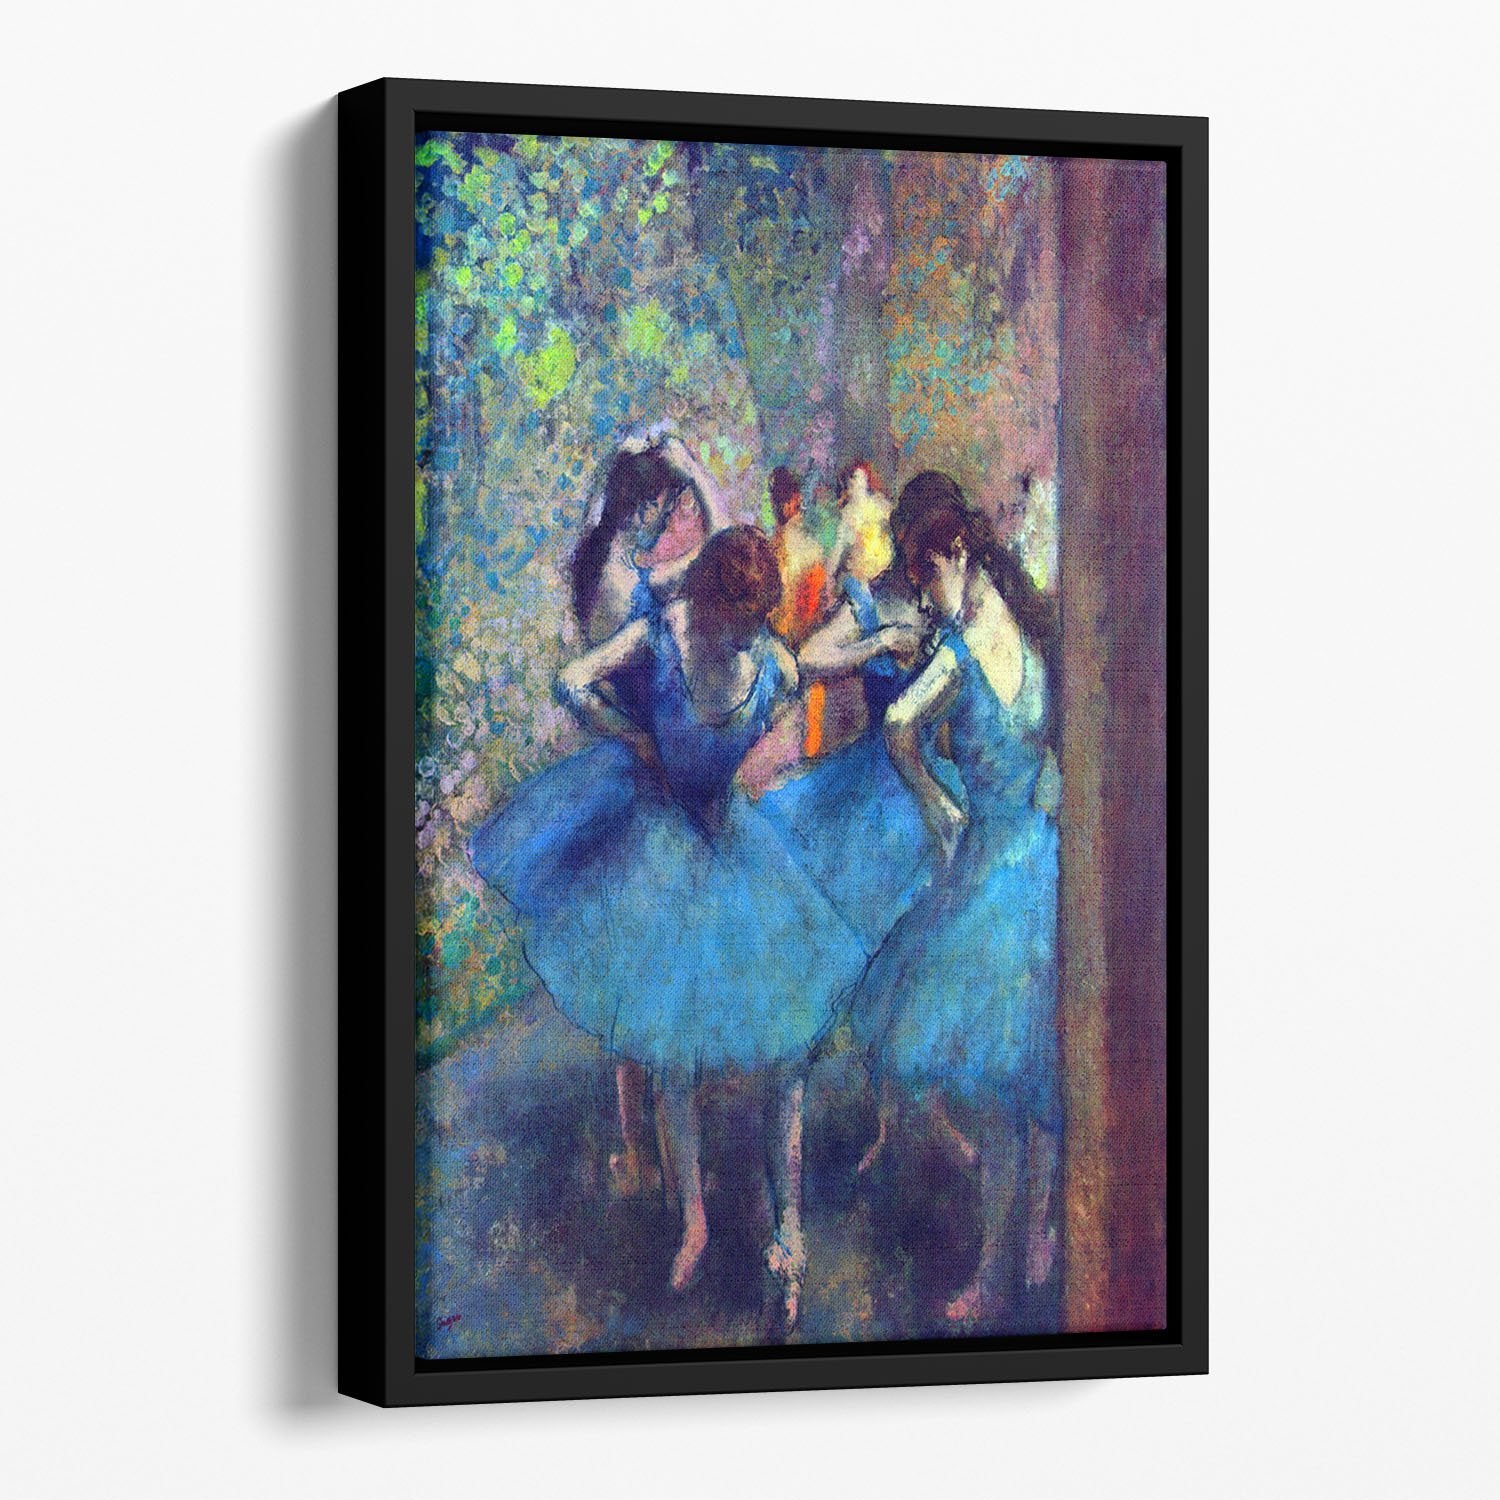 Dancers 1 by Degas Floating Framed Canvas